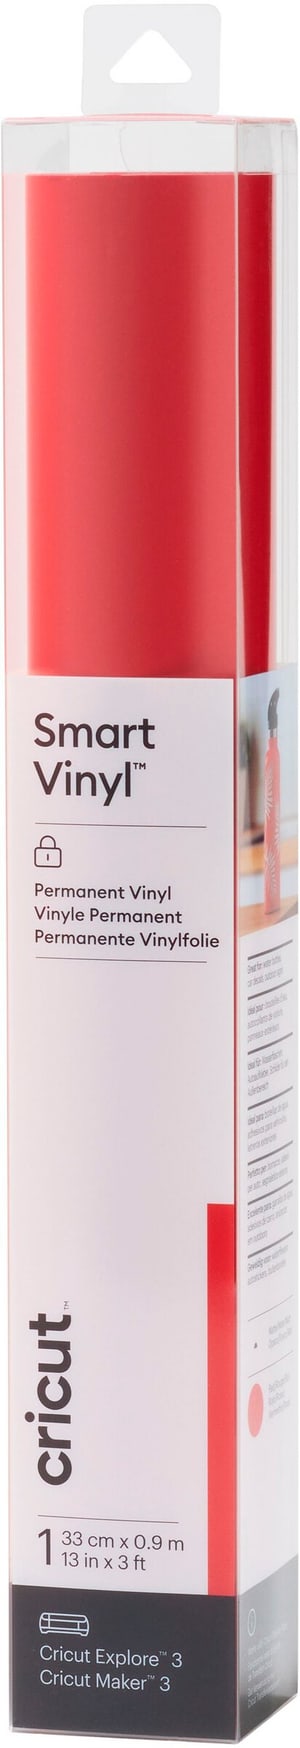 Film de vinyle Smart Matt Permanent 33 x 91 cm, Rouge